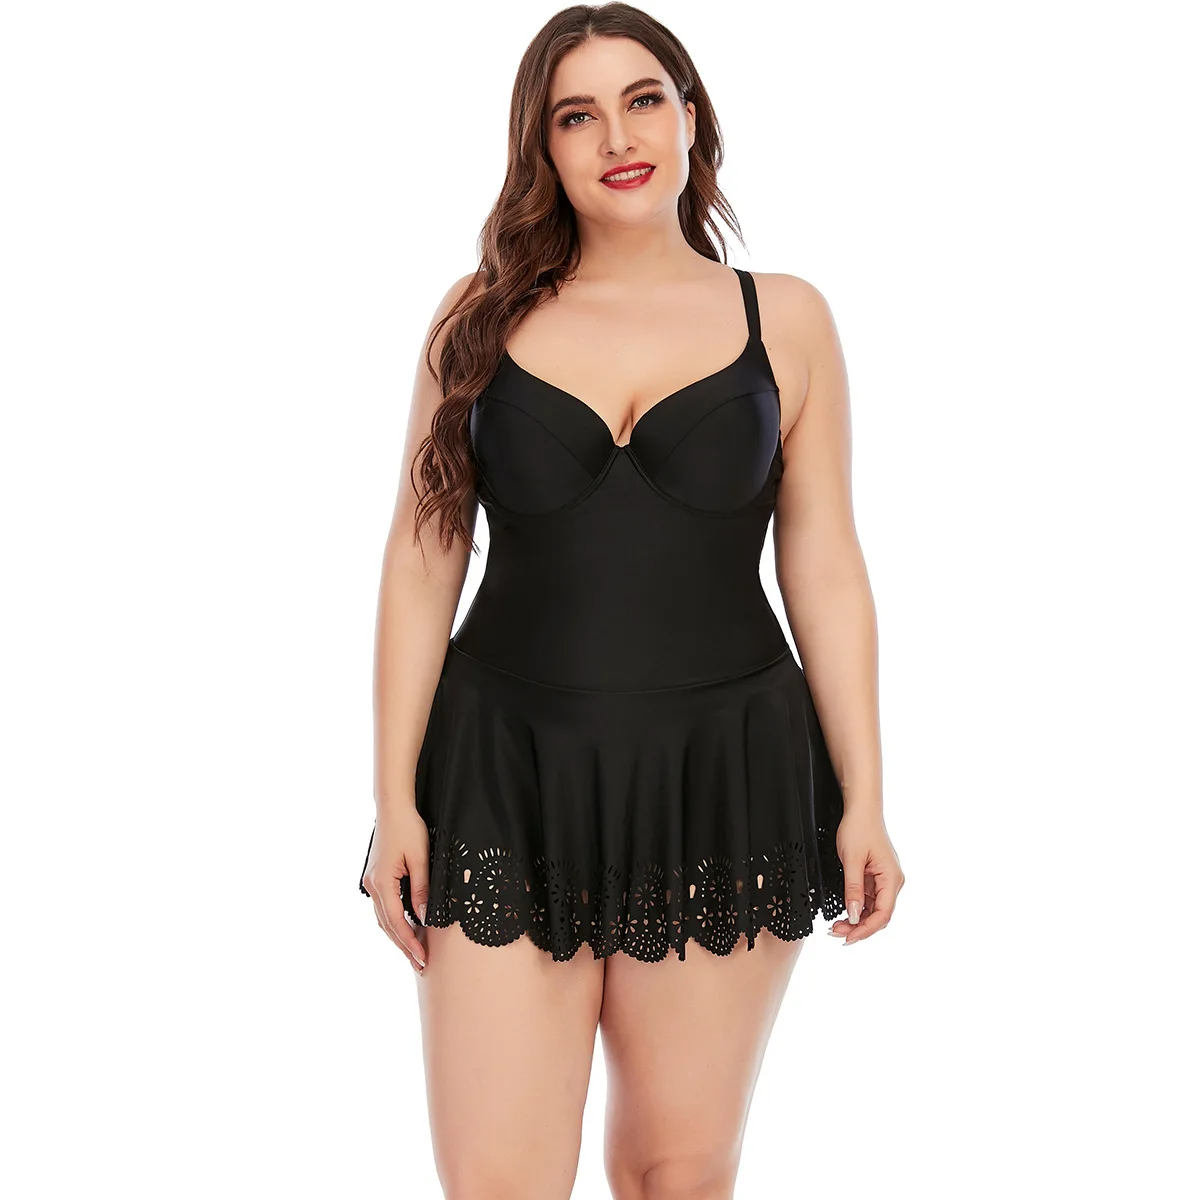 

Plus Size Swimwear Women Tankini Solid Black Halter Push Up Padded Underwire One Piece Suit Beach Bathing Suit Skirt Swimsuits